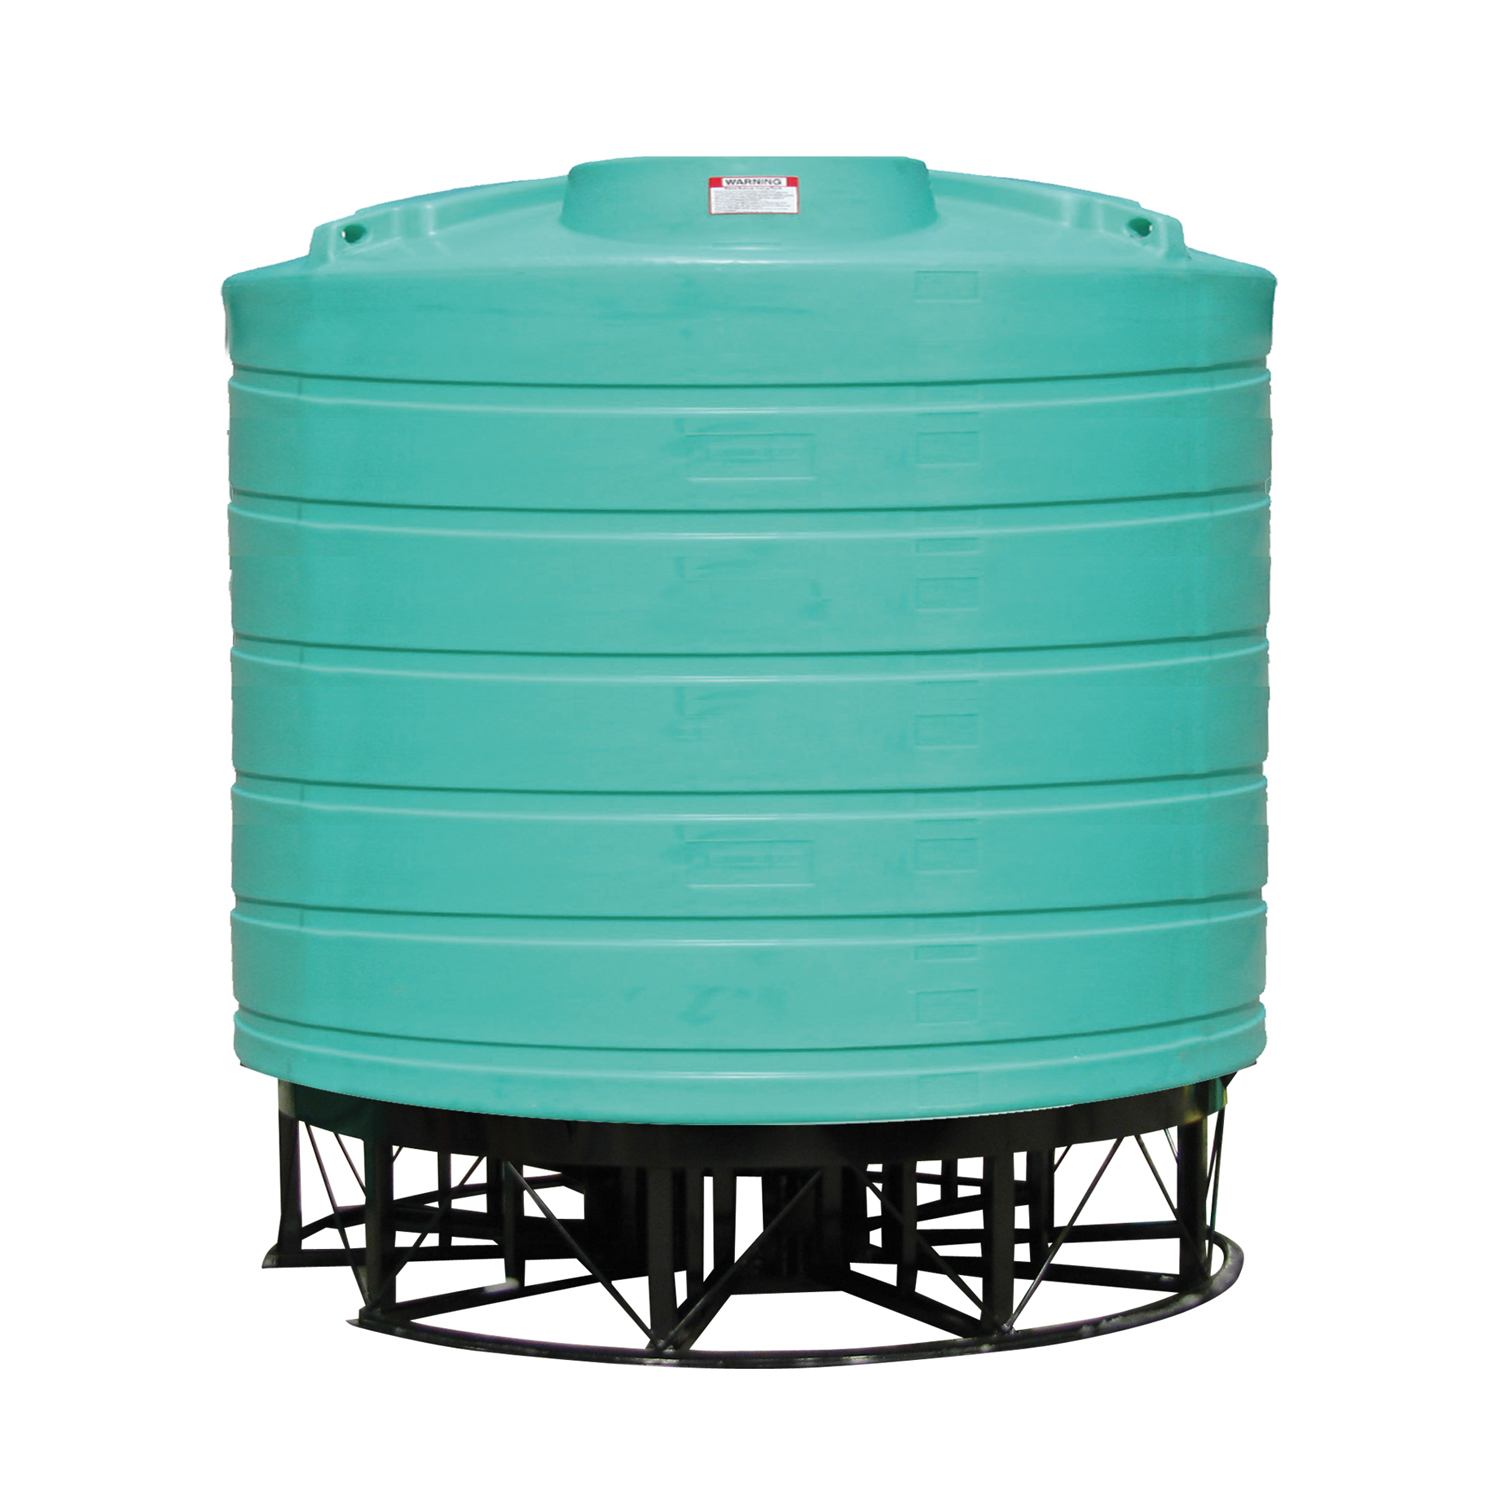 Enduraplas 7,011 Gallon Cone Bottom Storage Tank